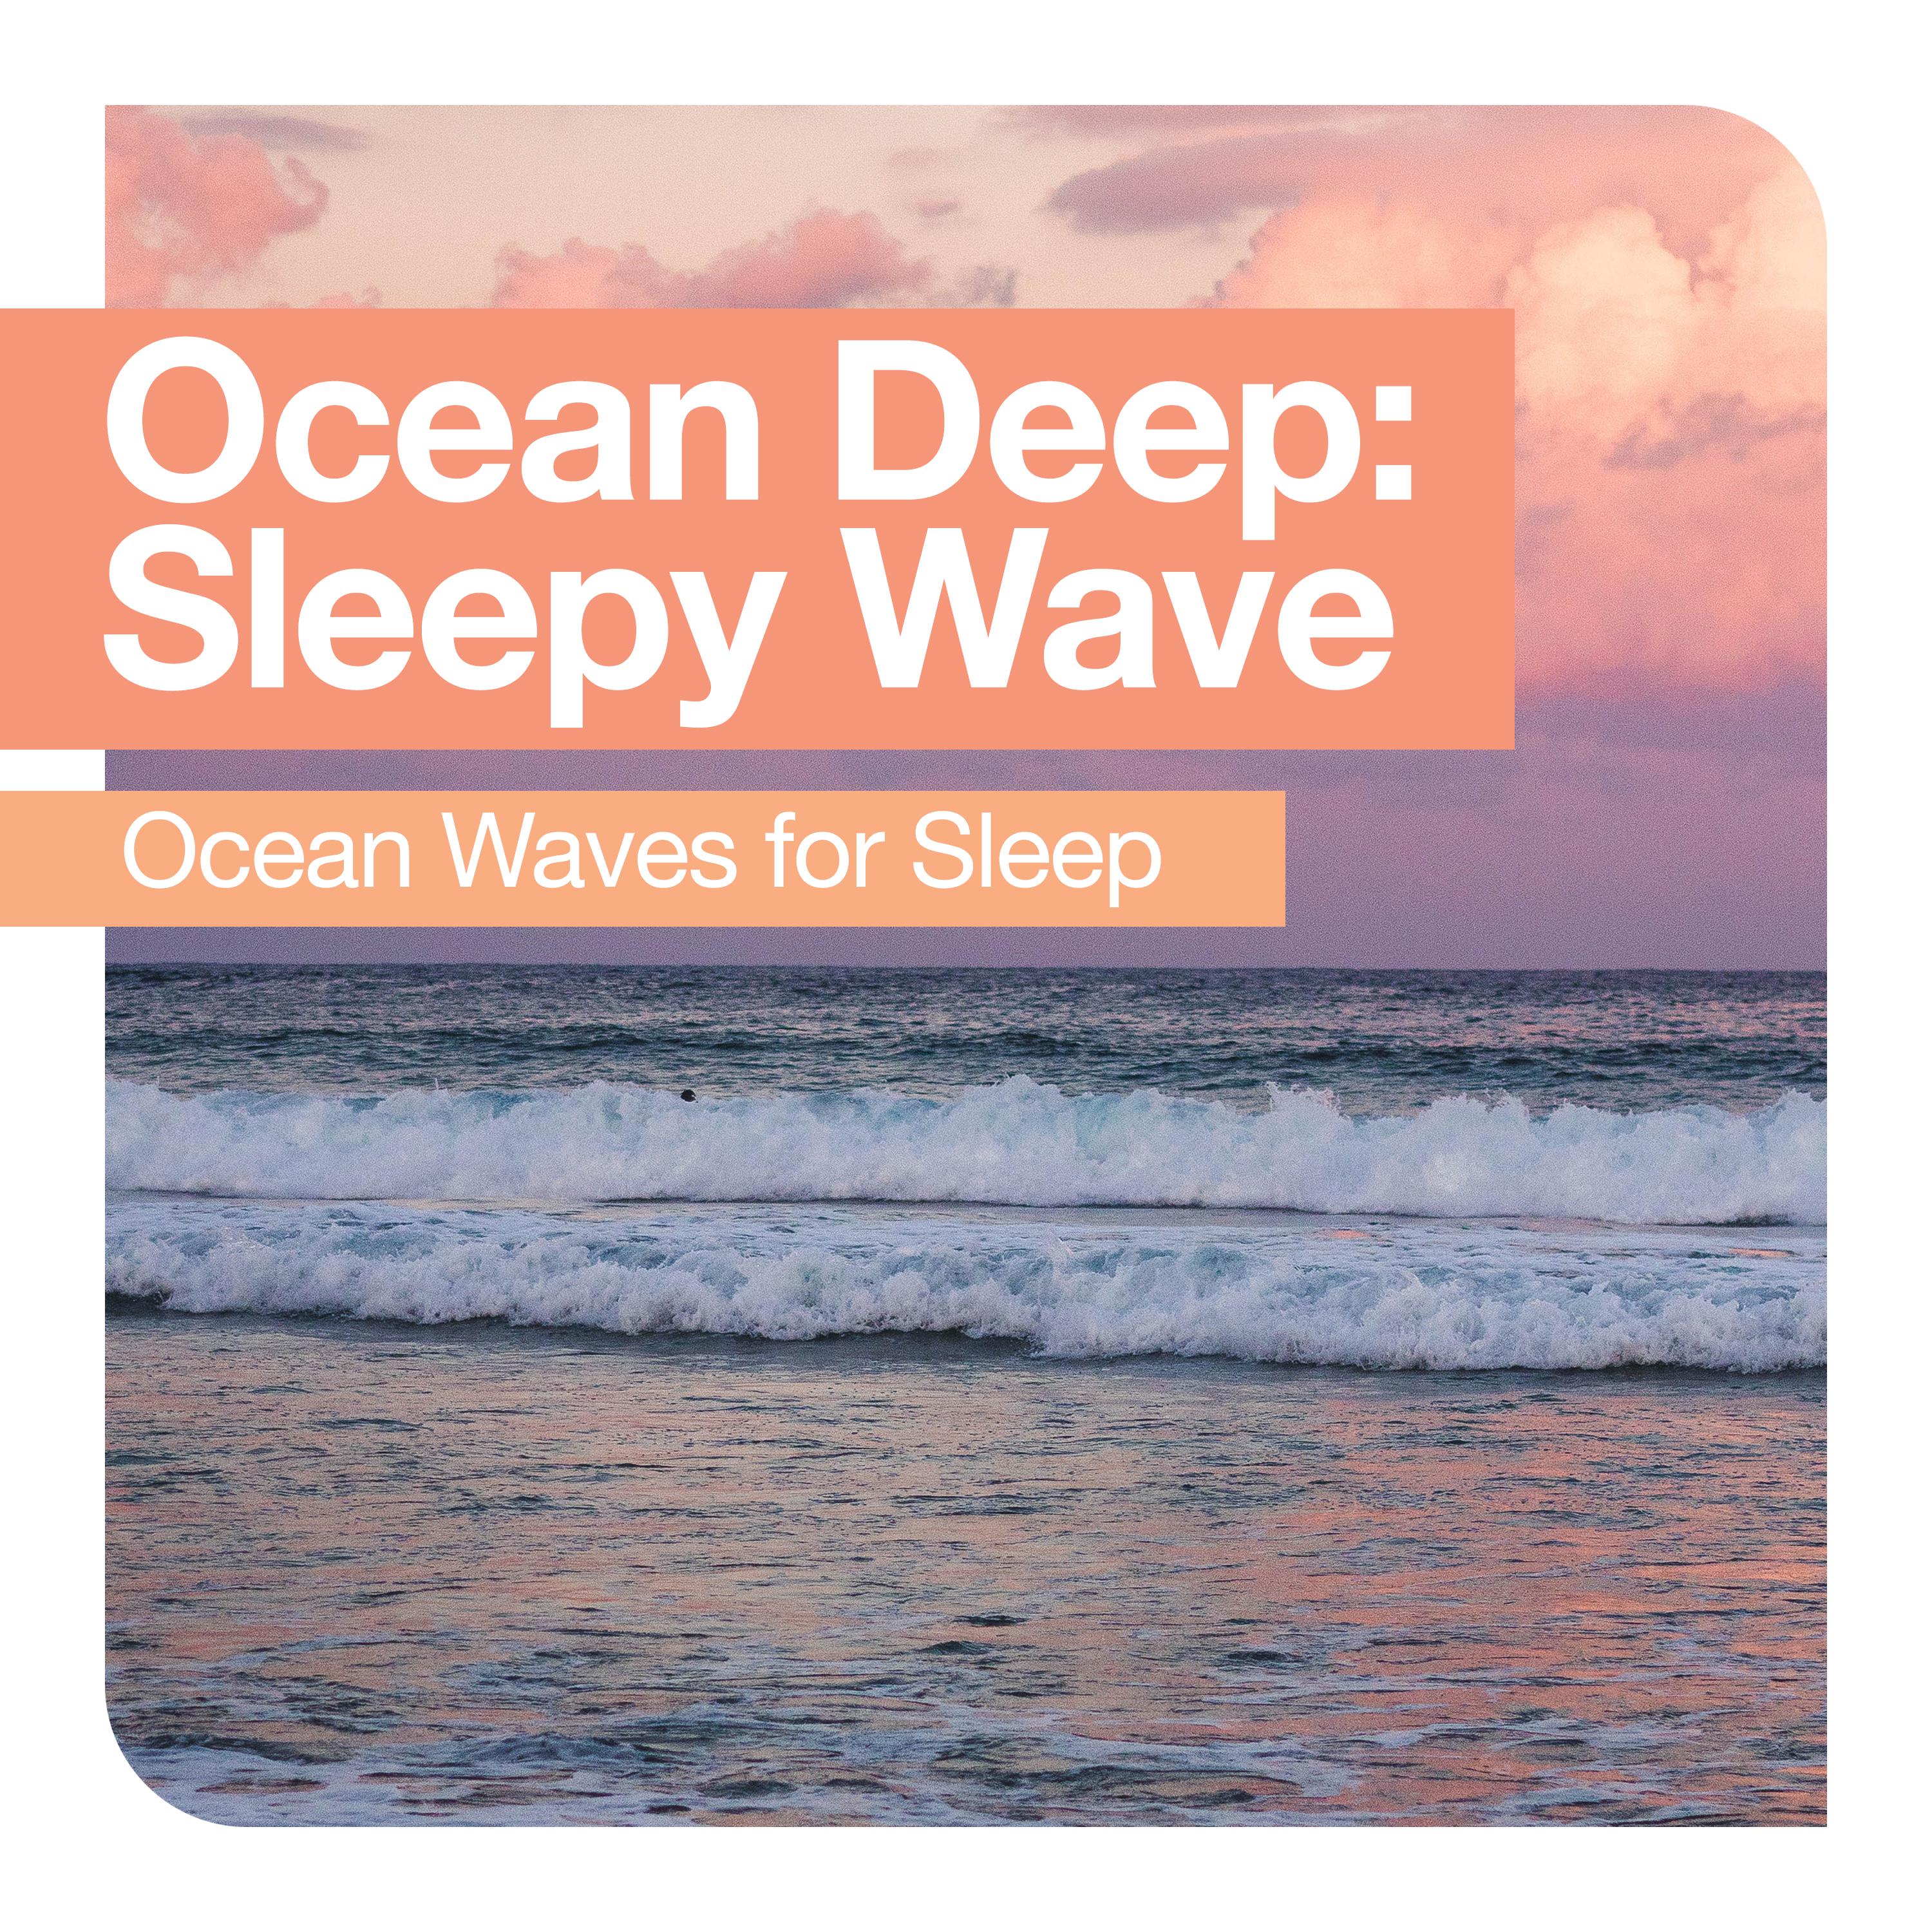 Ocean Deep: Sleepy Wave